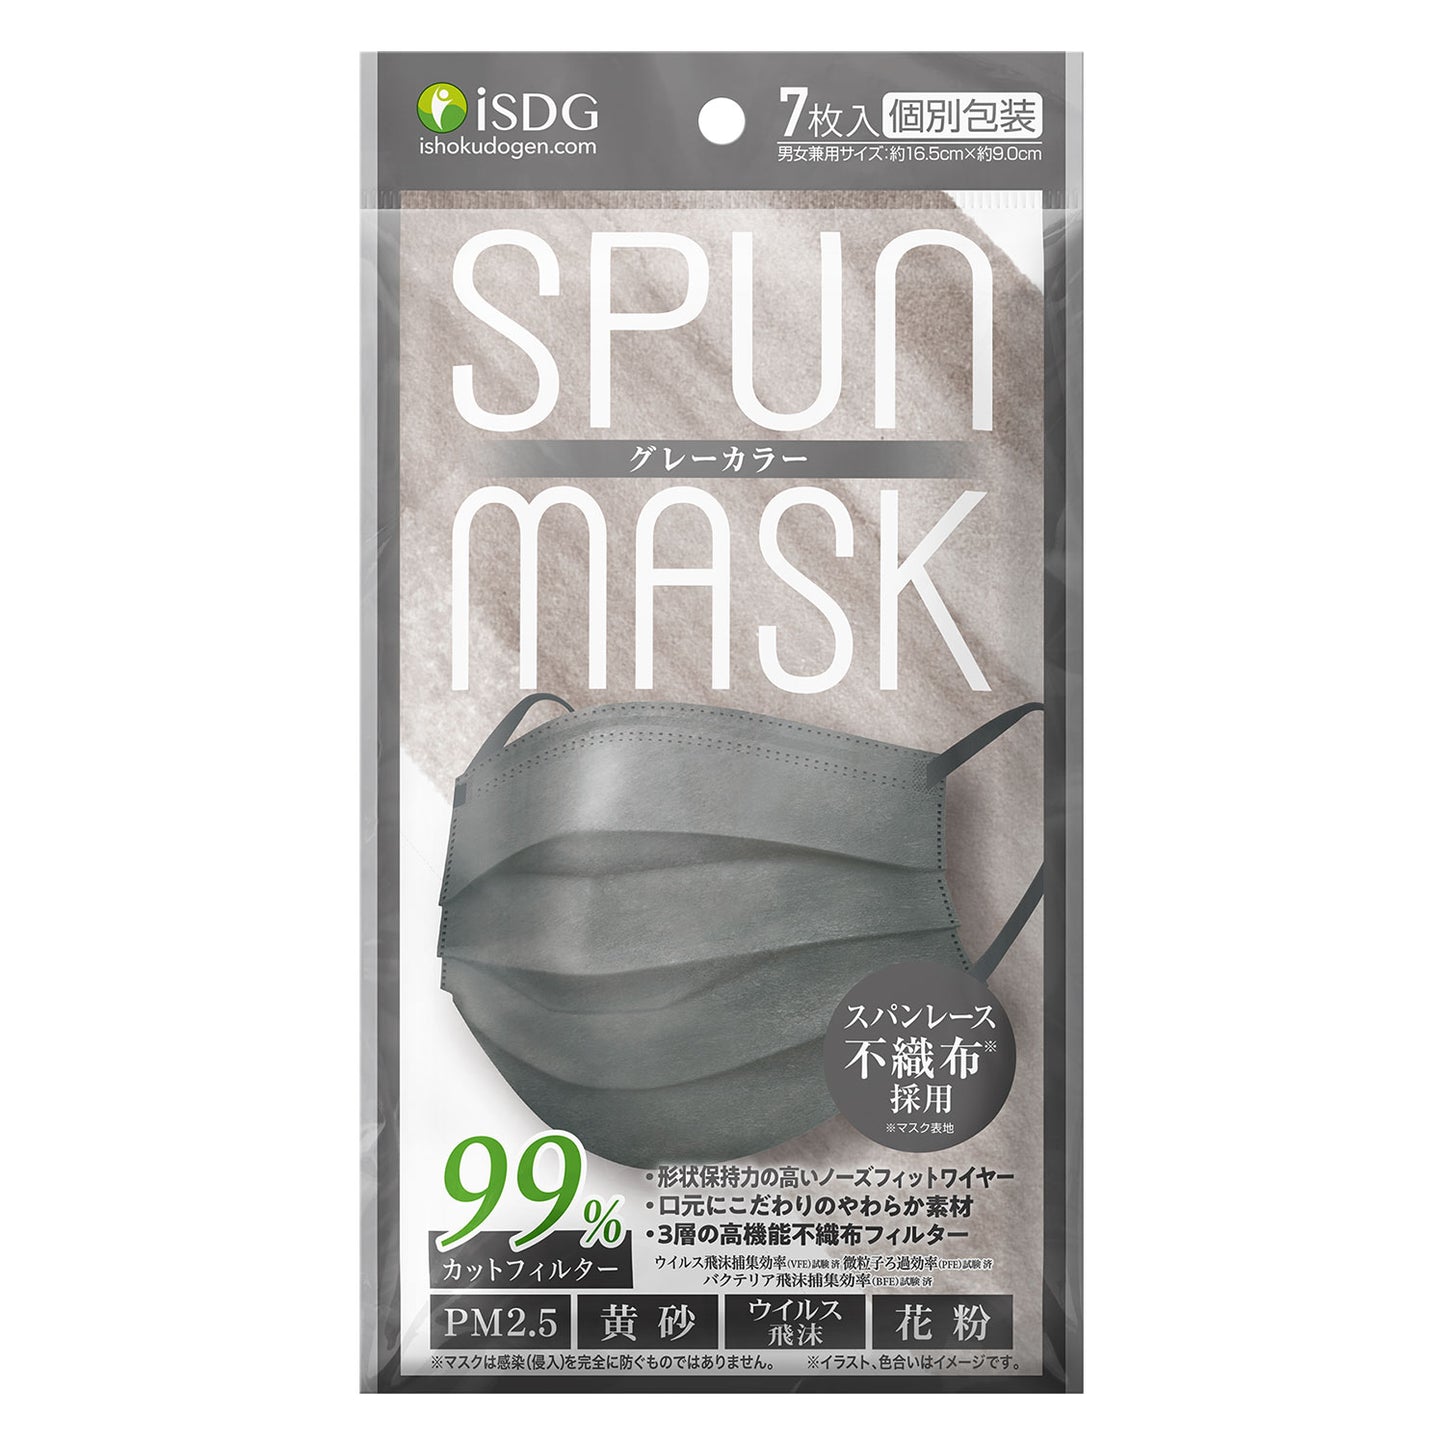 ISDG [Japan] Spun lace non-woven mask 7's